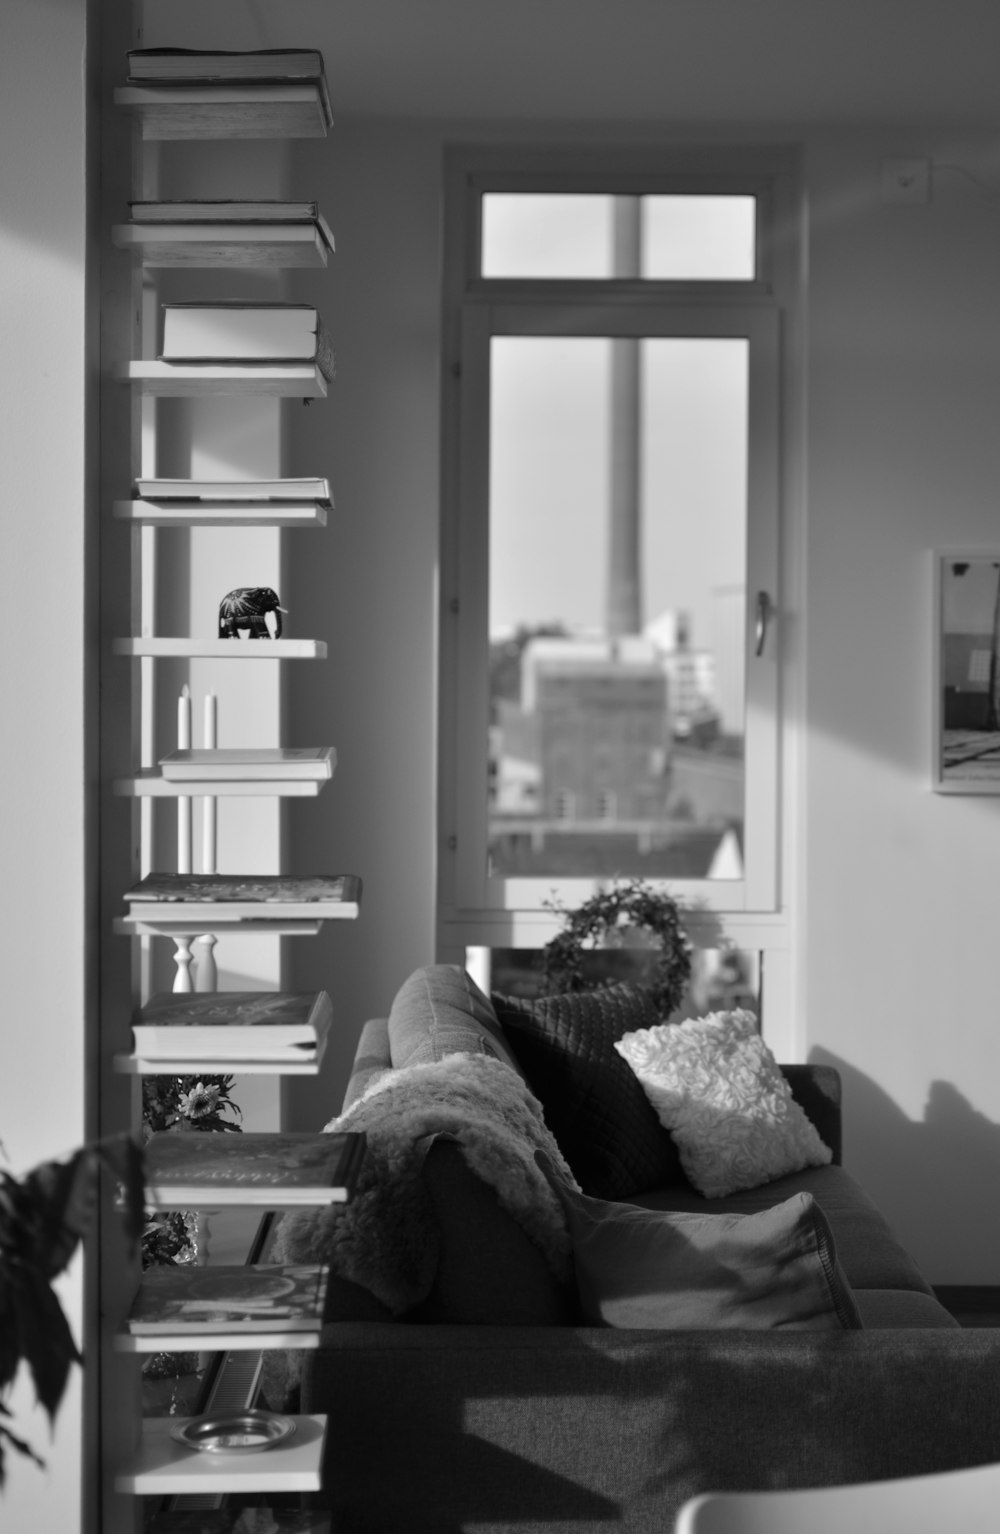 grayscale photo of bed near window